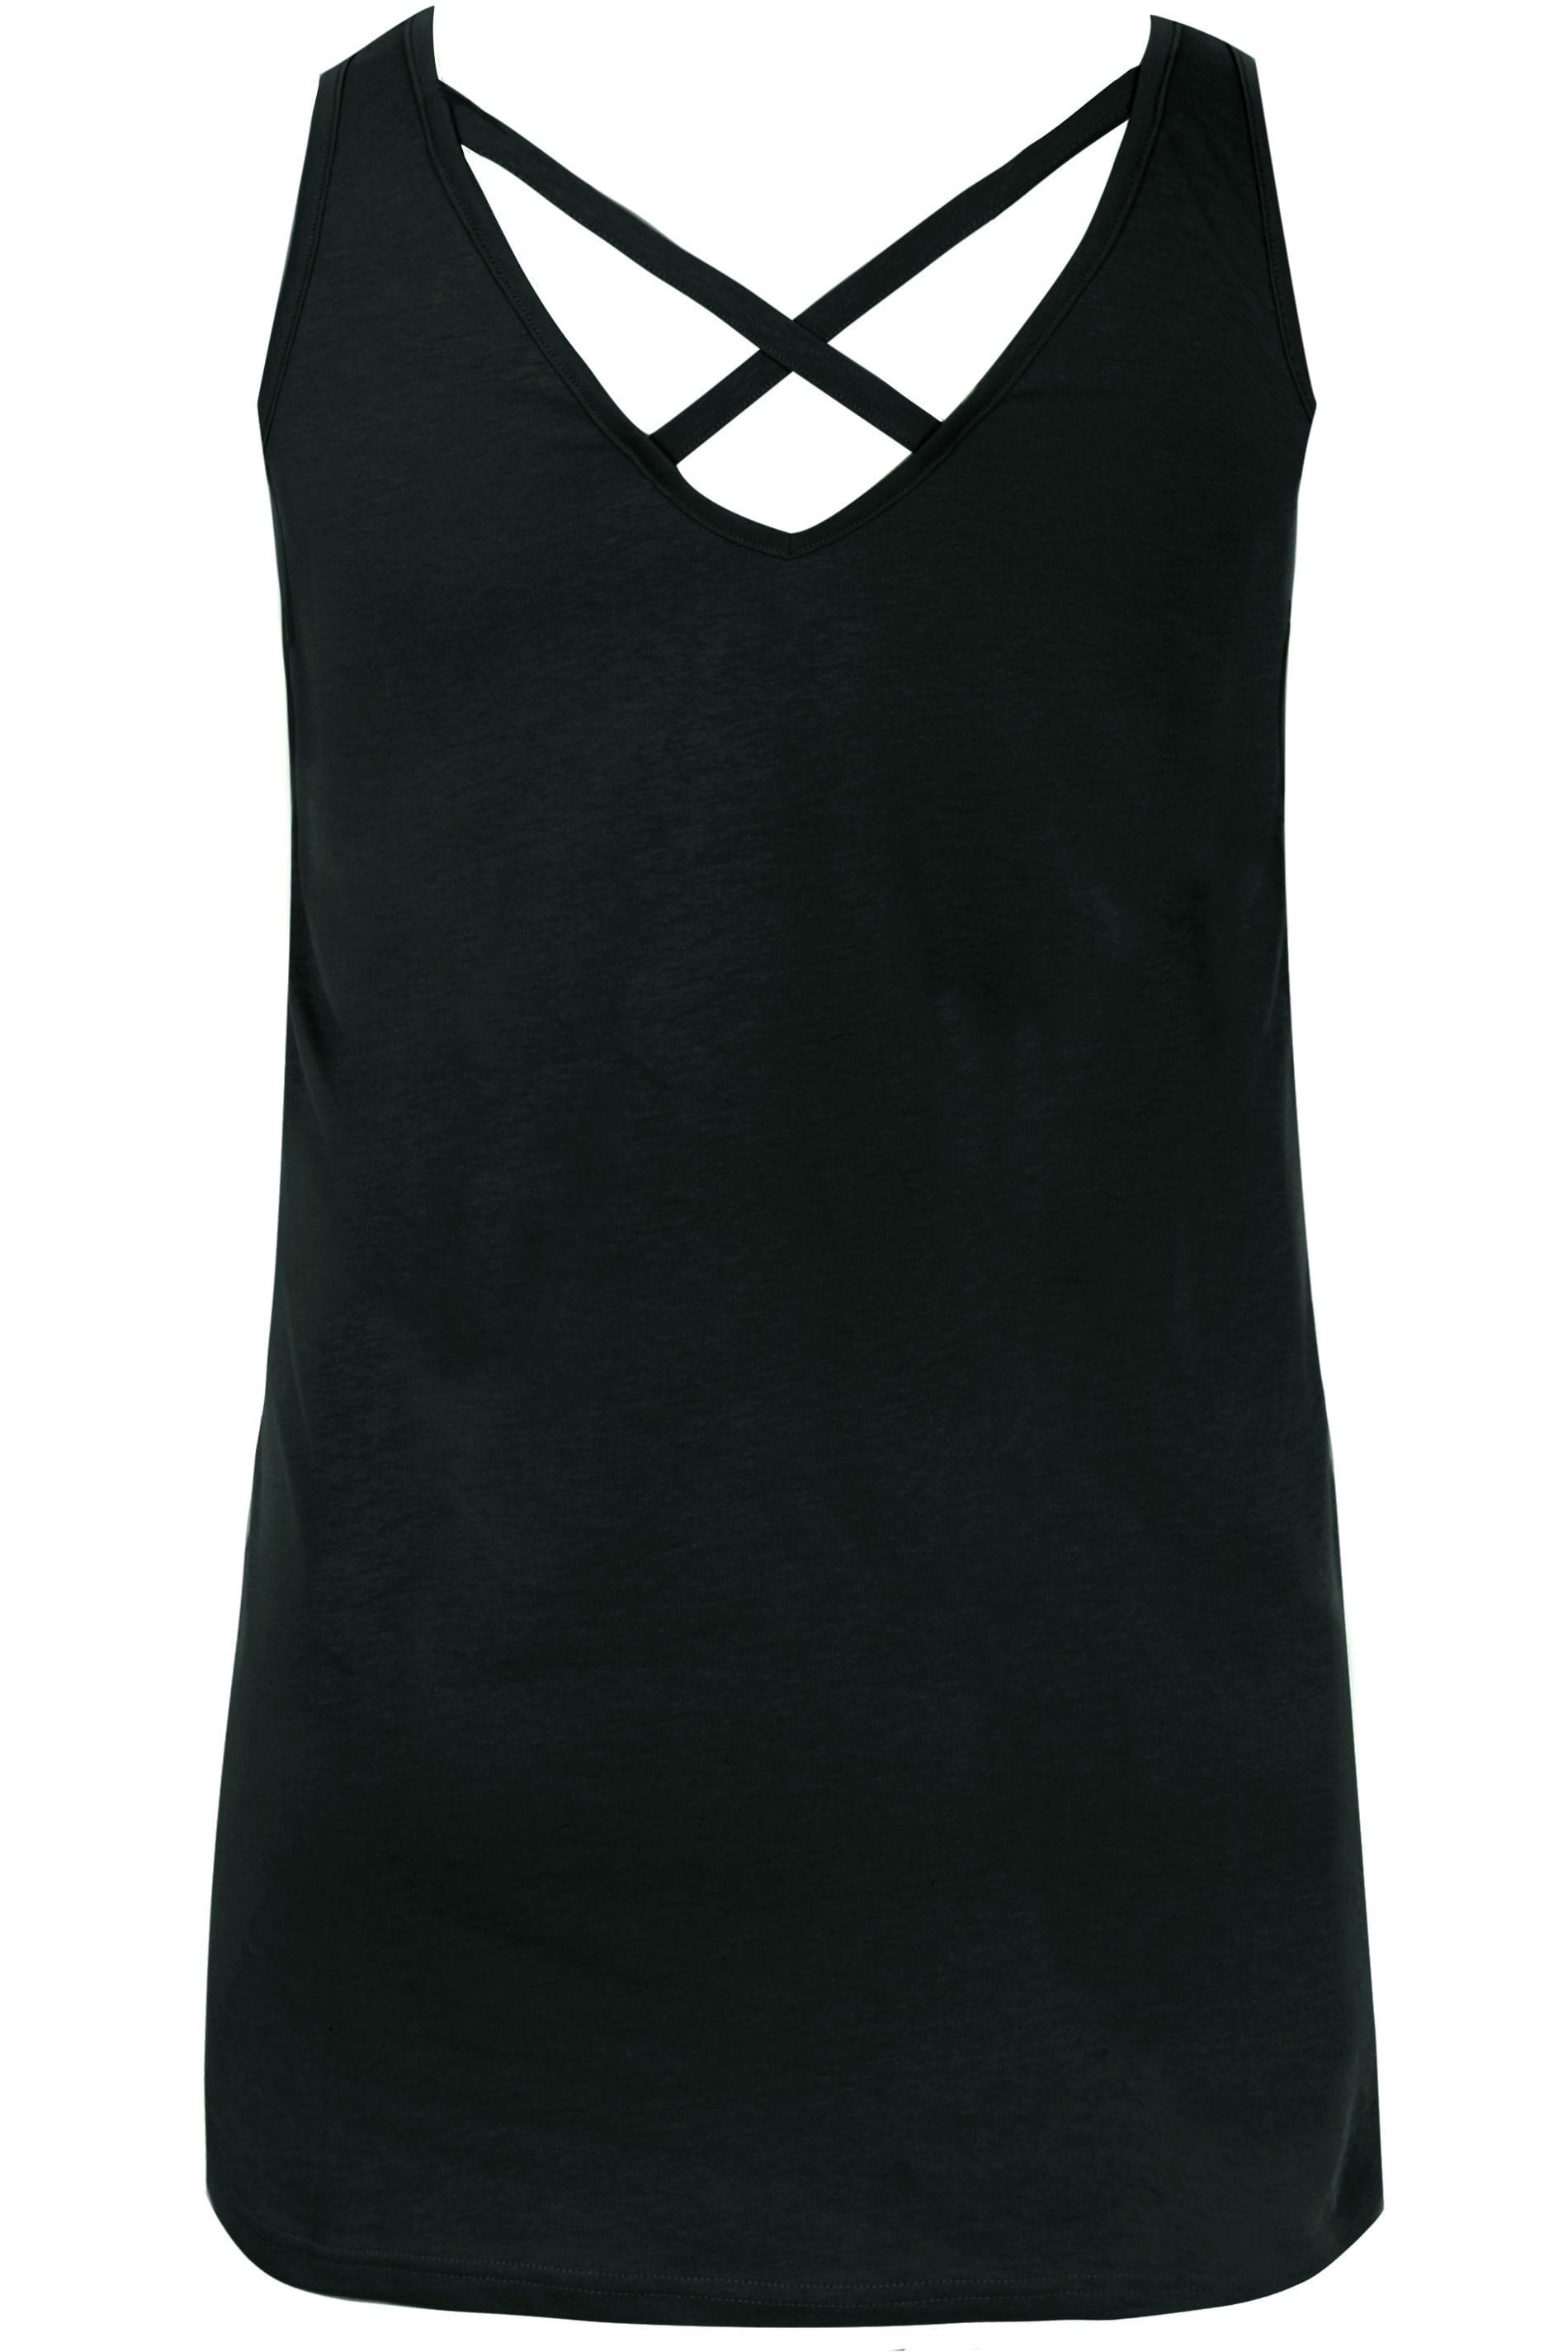 Black Cross Back Vest Top | Yours Clothing